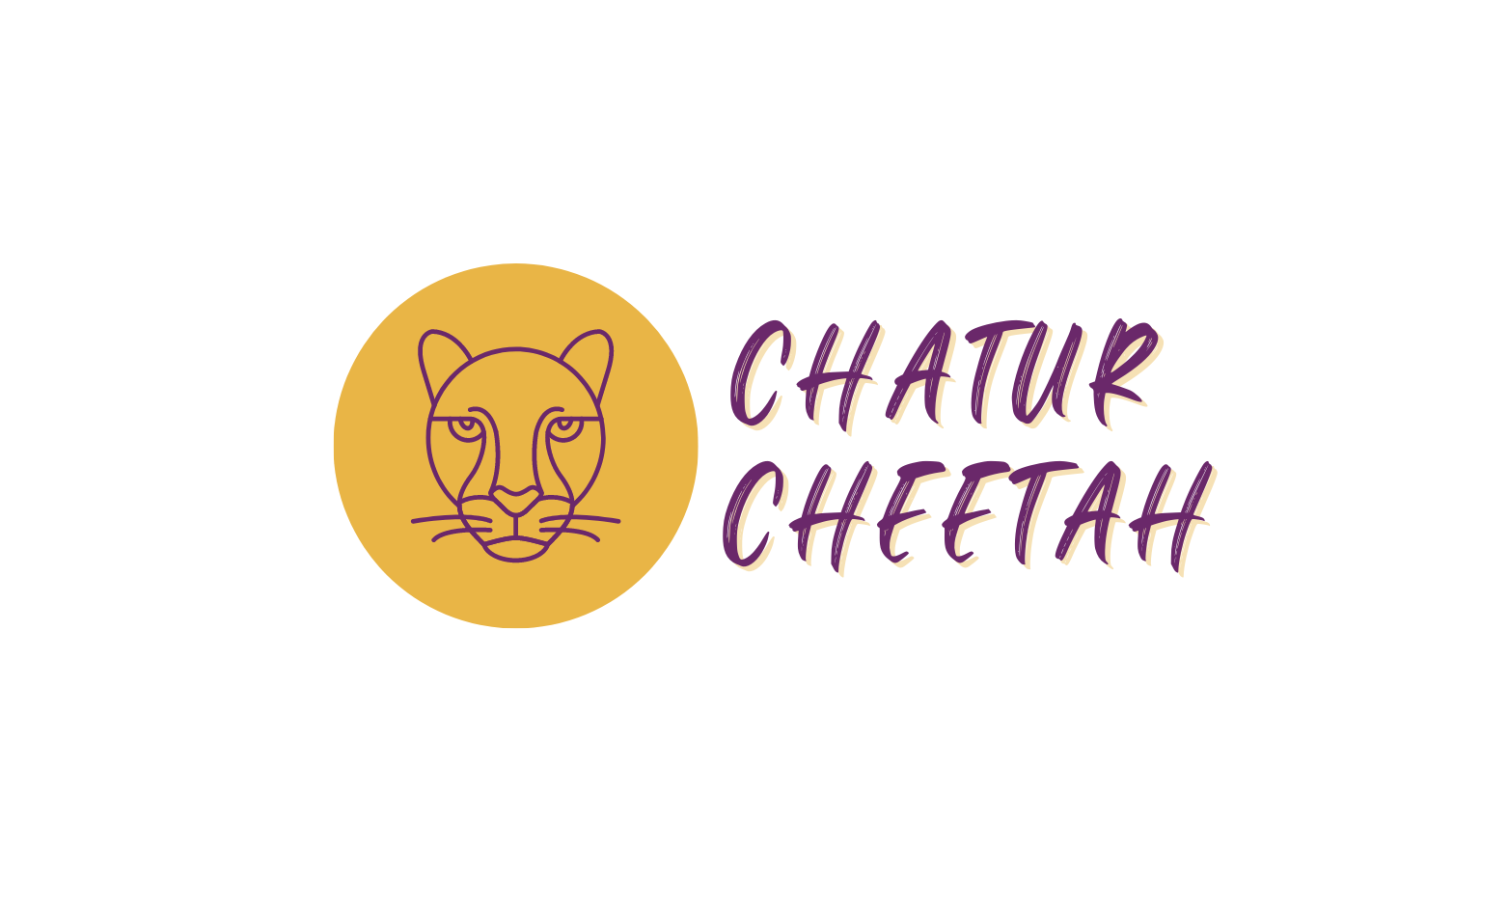 ChaturCheetah.com